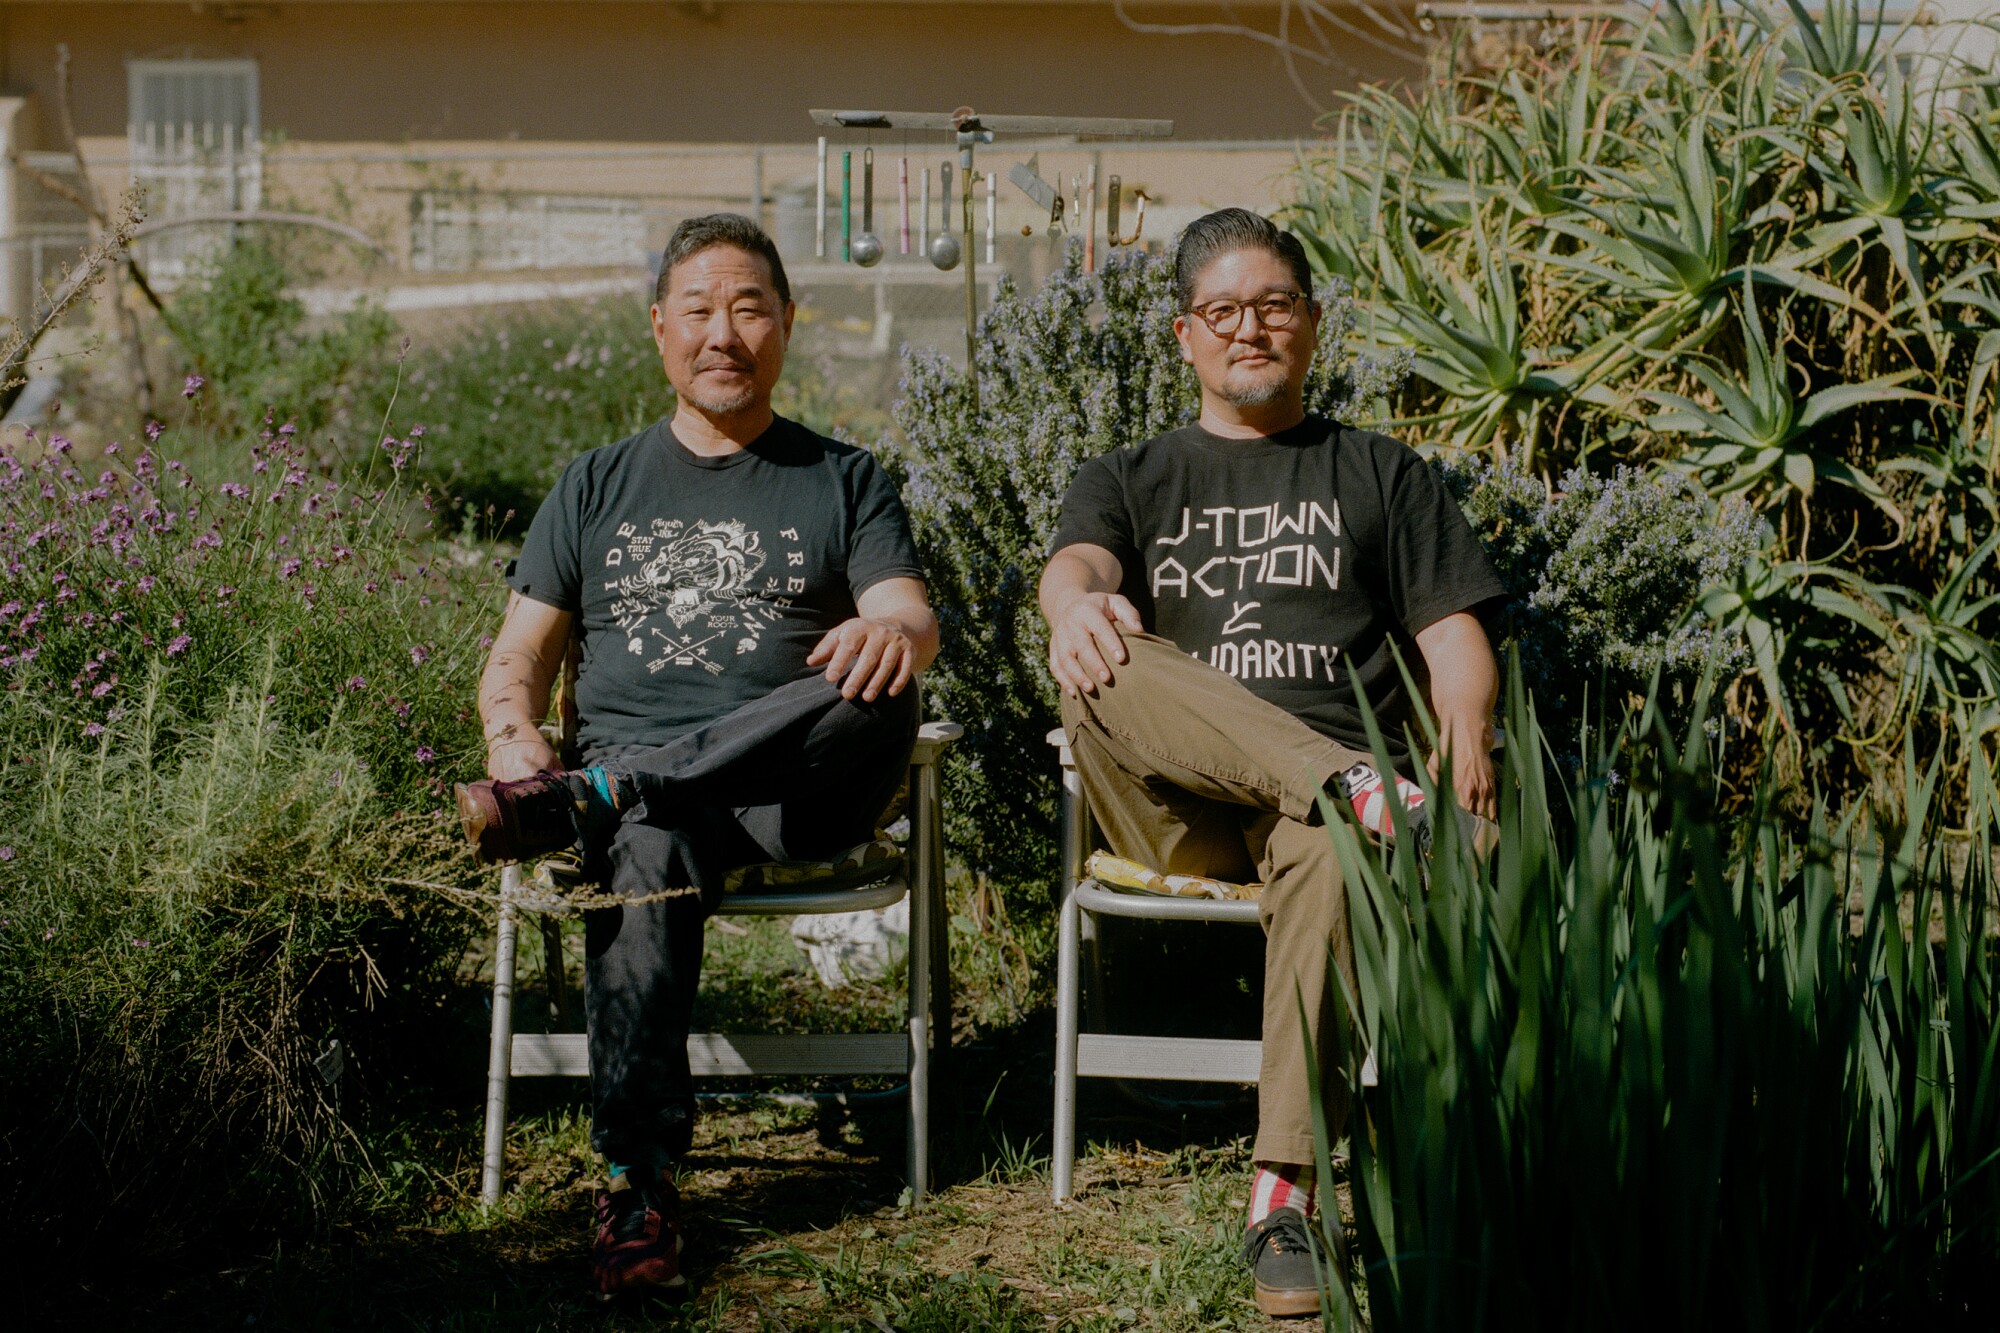 Devon Tsuno (right) and Alan Nakagawa (left) at Alan's home backyard "K-Town Butterfly Sanctuary."